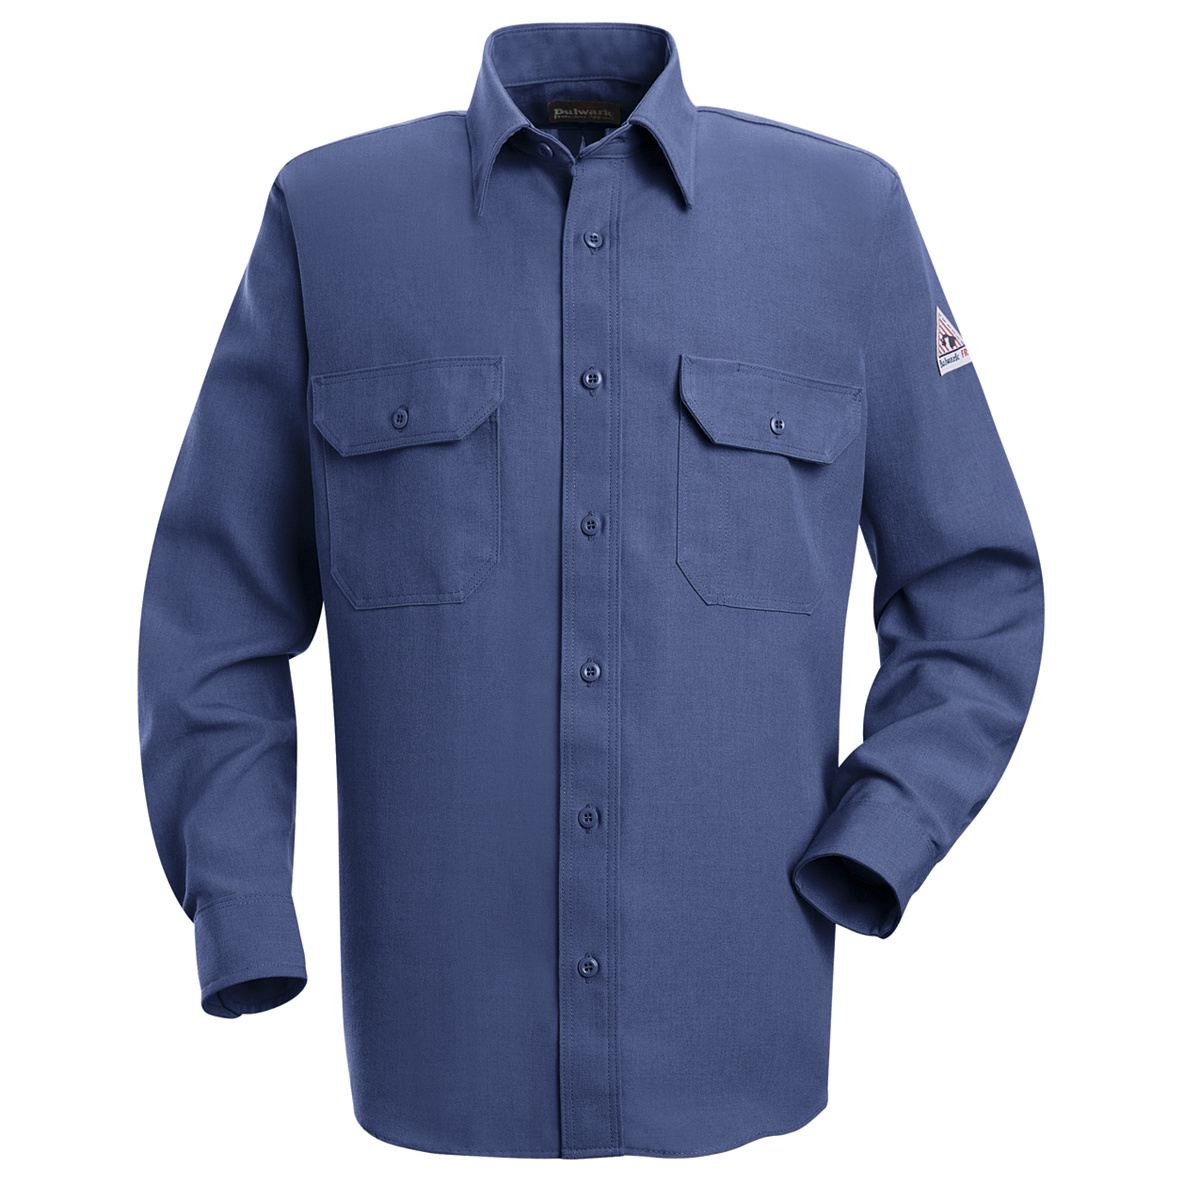 Bulwark® 3X Regular Gulf Blue Nomex® IIIA/Nomex® Aramid/Kevlar® Aramid Flame Resistant Uniform Shirt With Button Front Closure